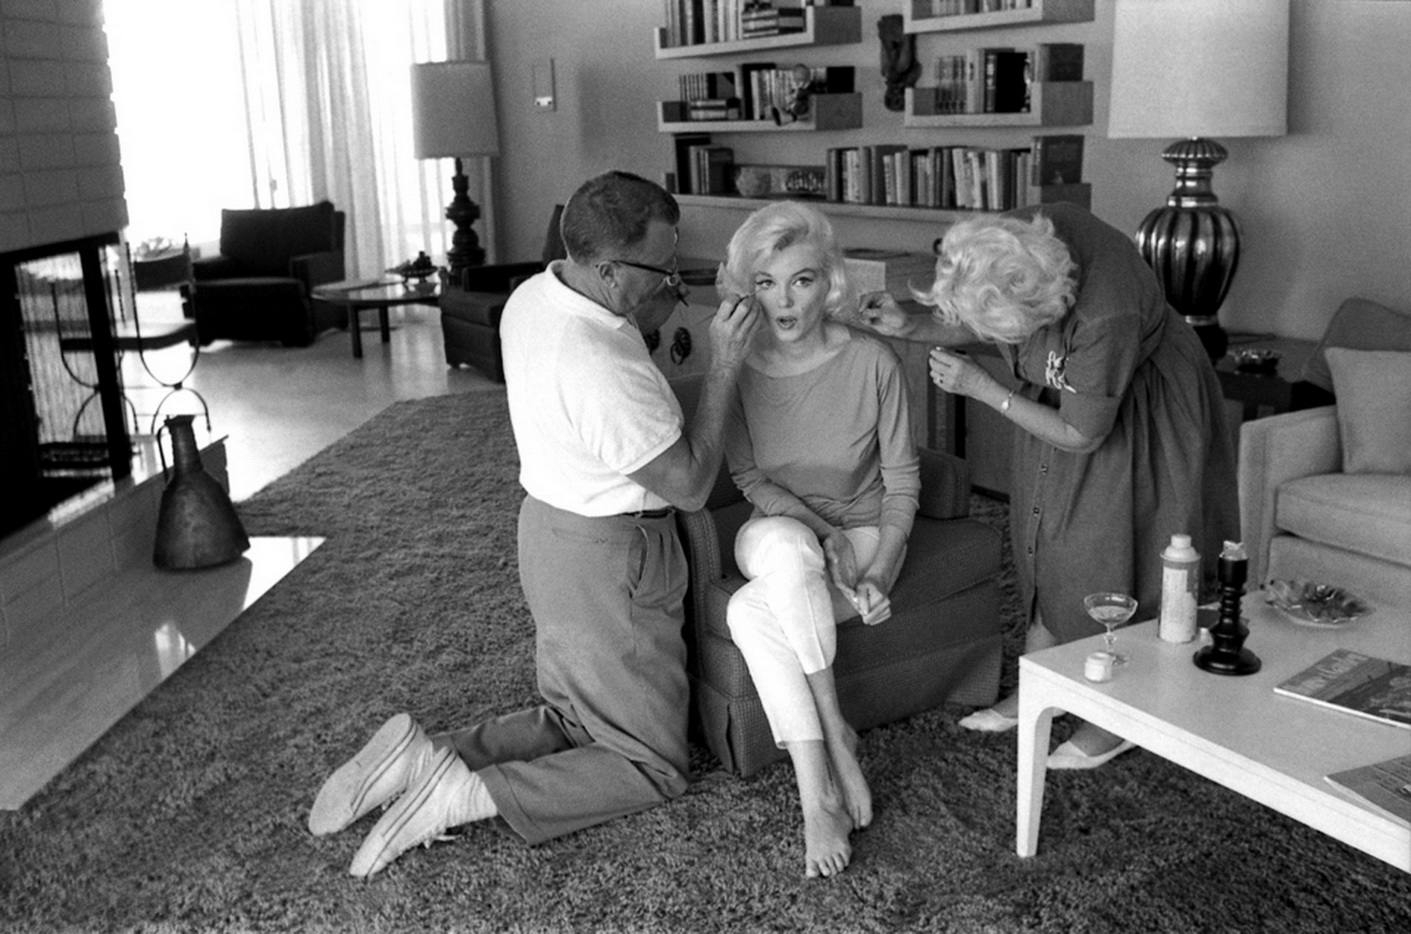 Gorgeous Marilyn. - Marilyn Monroe, Celebrities, Cinema, 1962, Hollywood stars, Story, Longpost, Black and white photo